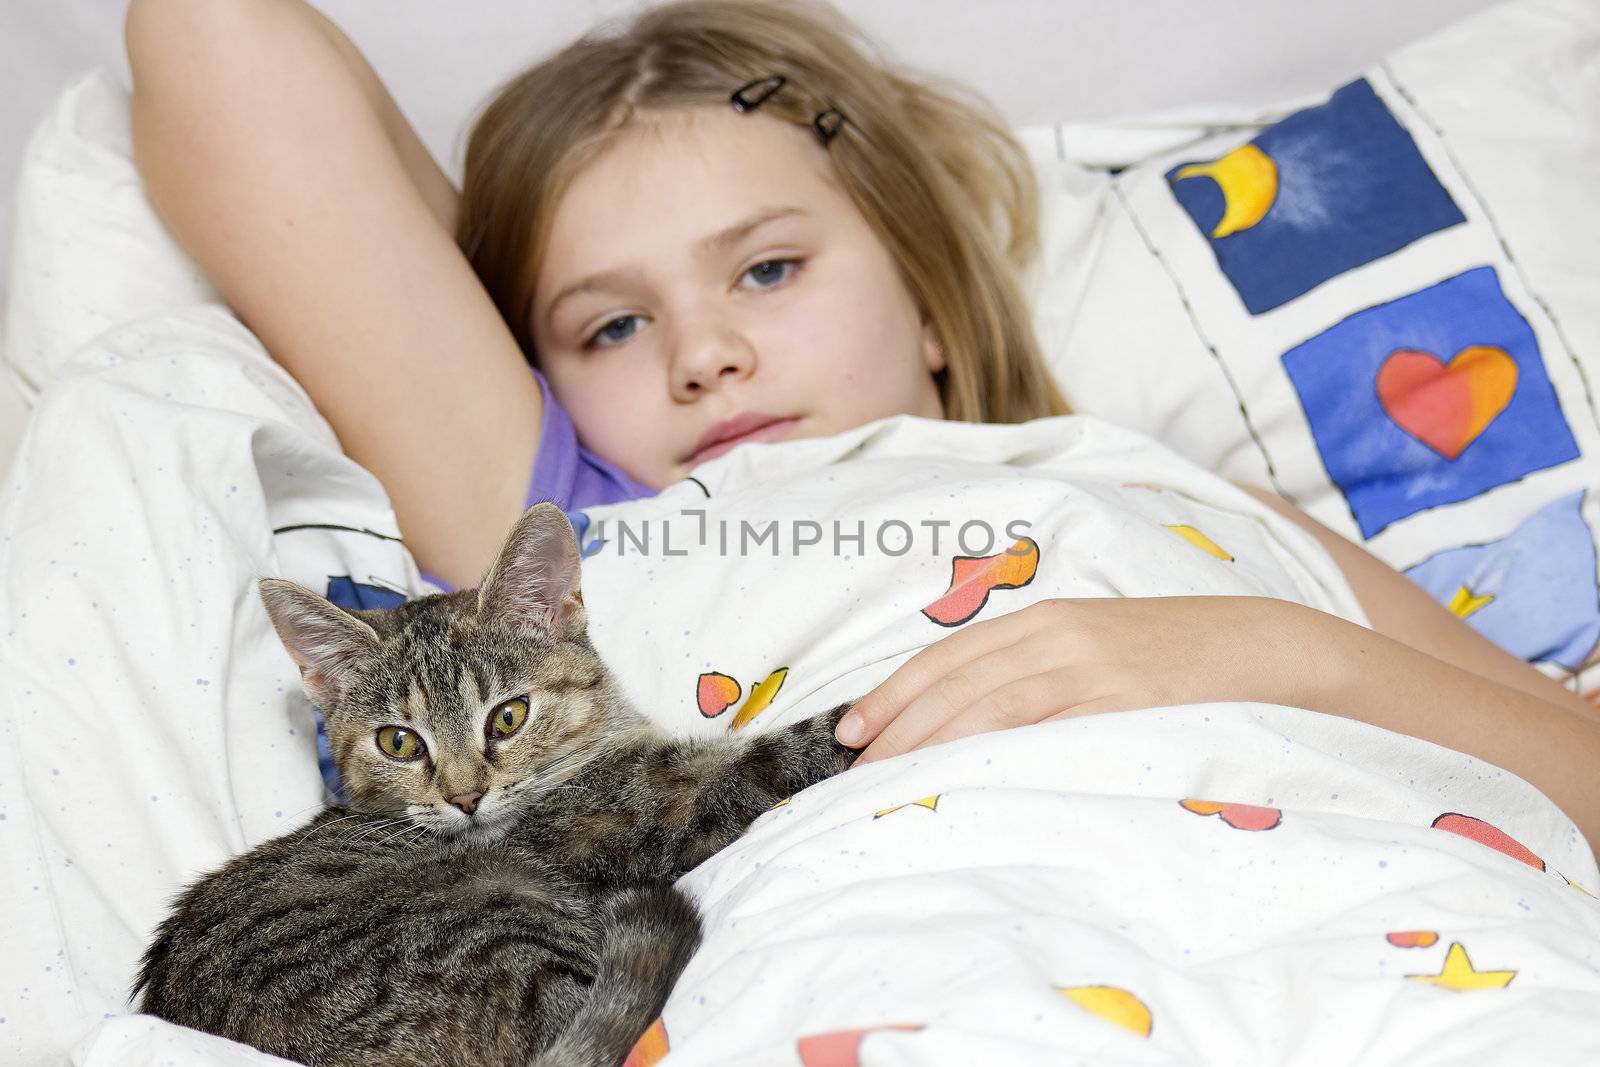 little girl and kitten by miradrozdowski